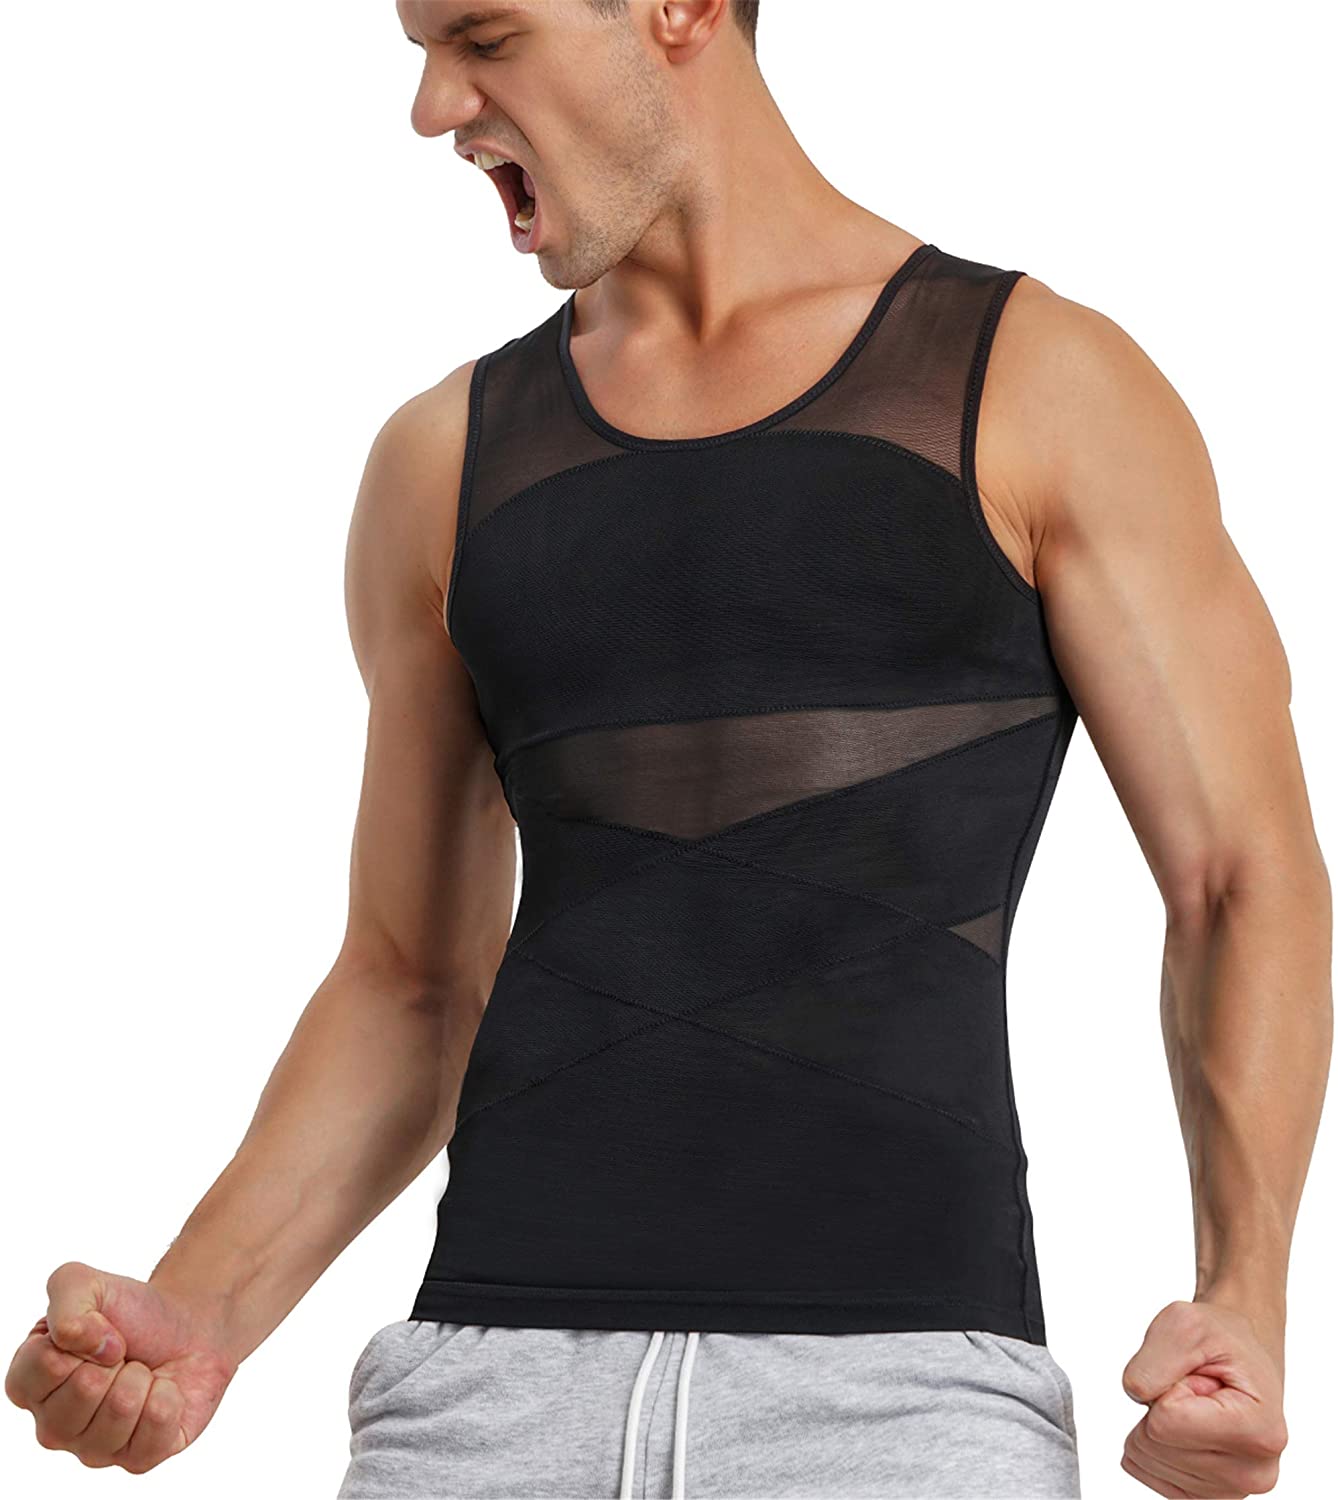 TAILONG Men's Compression Shirt for Body Shaper Slimming Vest